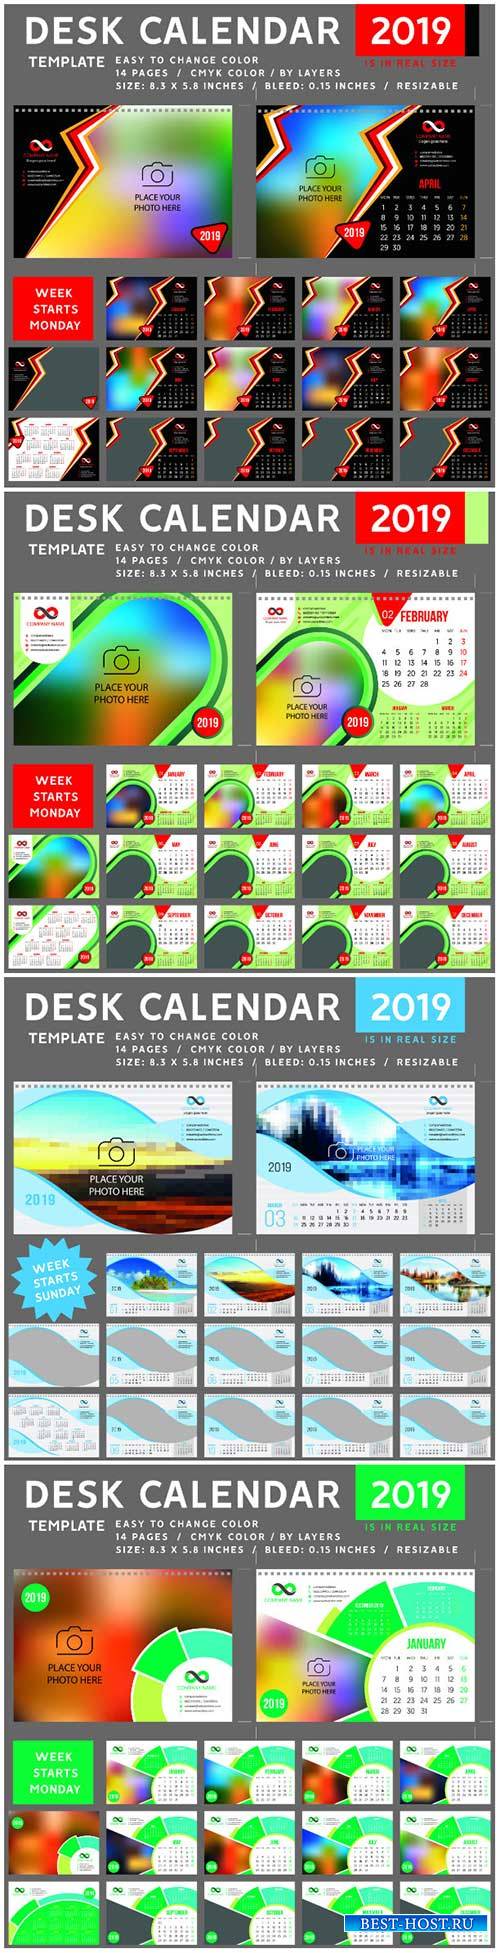 Desk Calendar 2019 vector template, 12 months included # 3